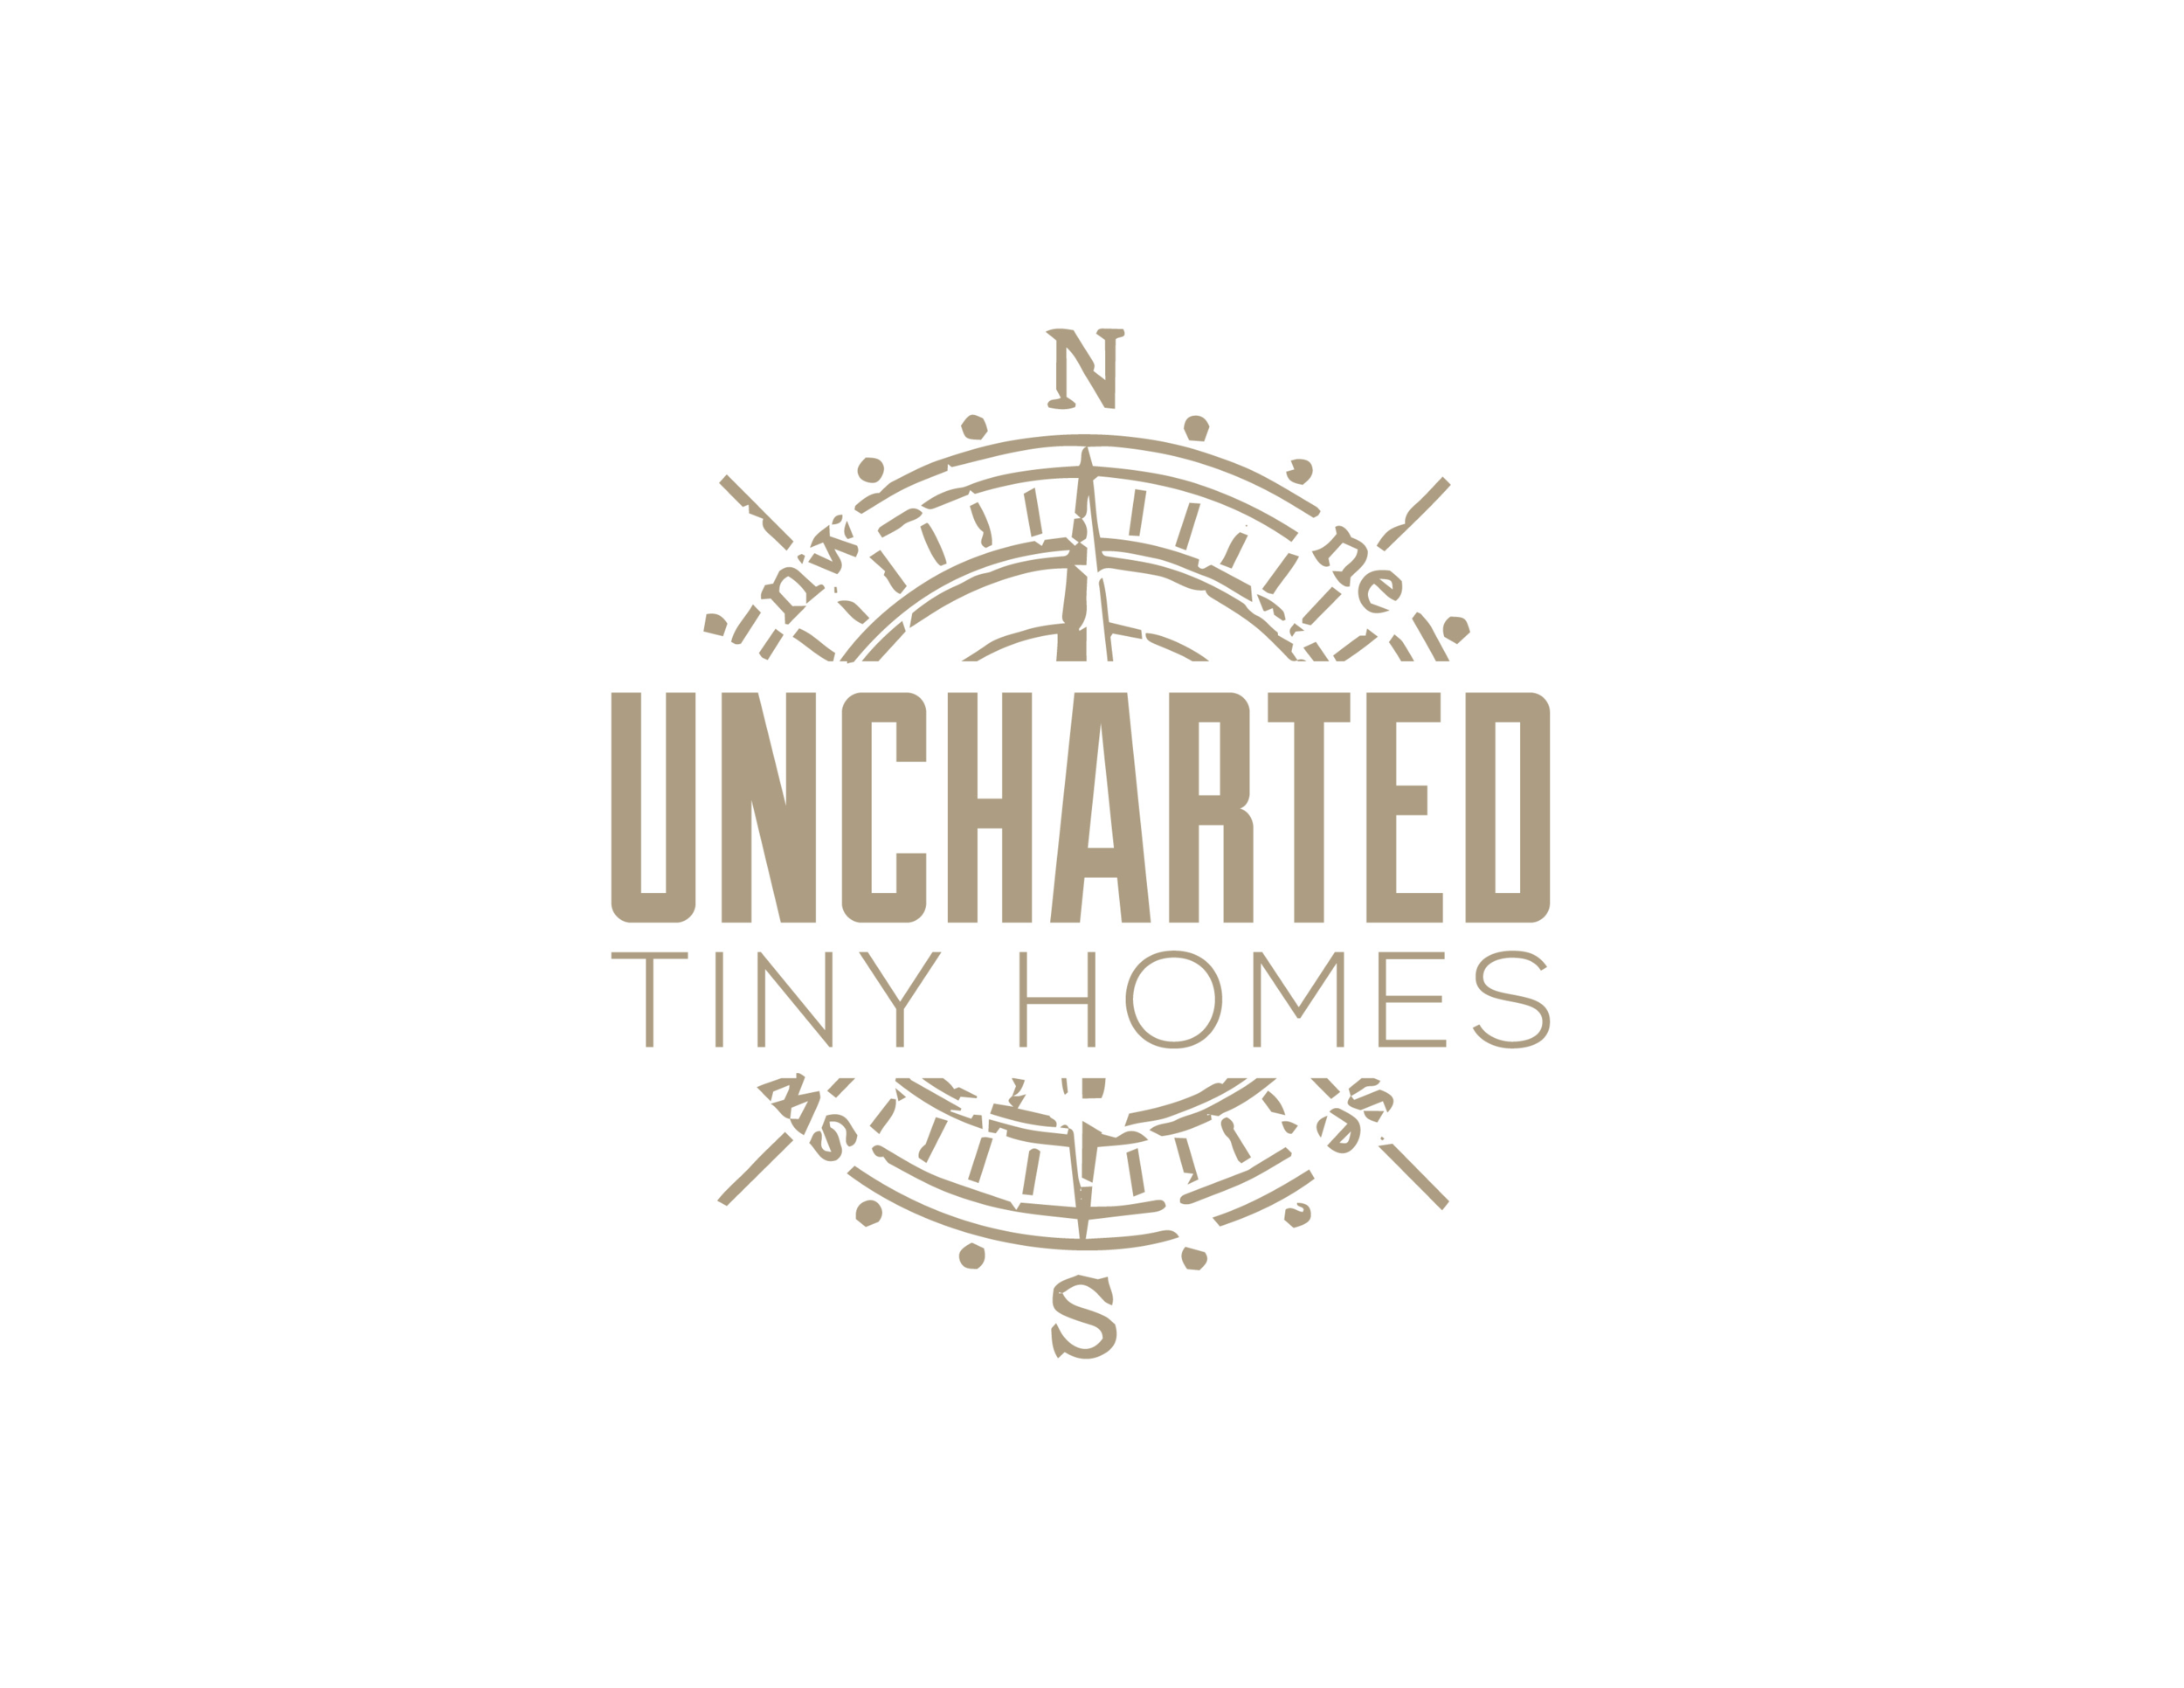 https://images.squarespace-cdn.com/content/v1/531f83bbe4b0da7cd7fa397c/1610847713547-UAX2O412RRBXF9KYGVW2/Logo+Uncharted+Tiny+Homes.png